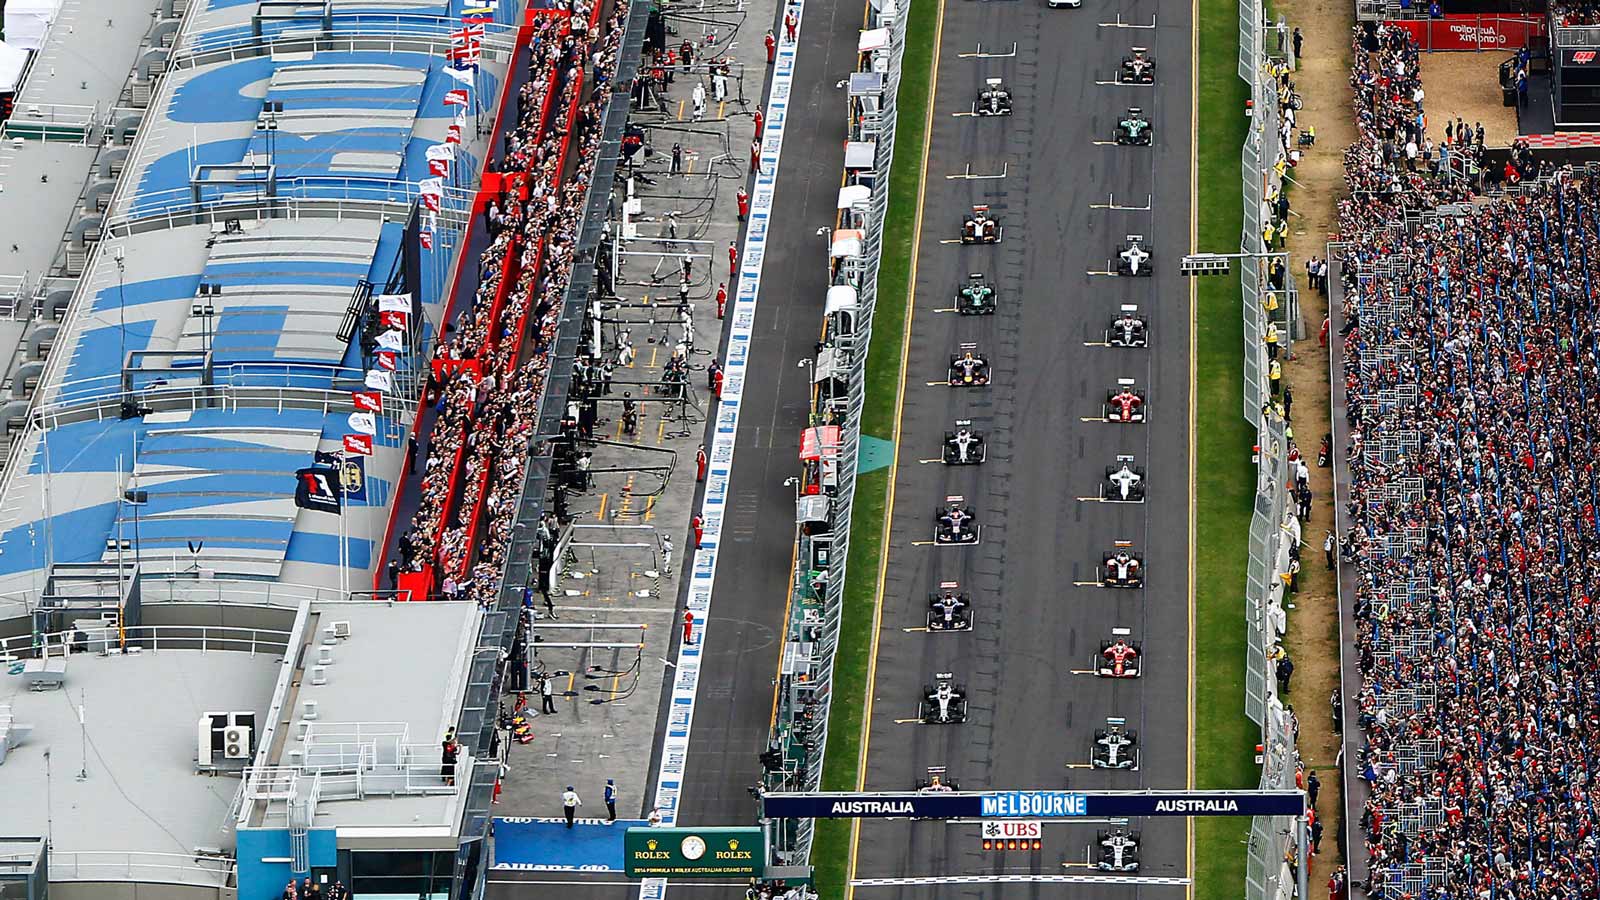 Circuit bump caused Bottas failure - Eurosport.co.uk